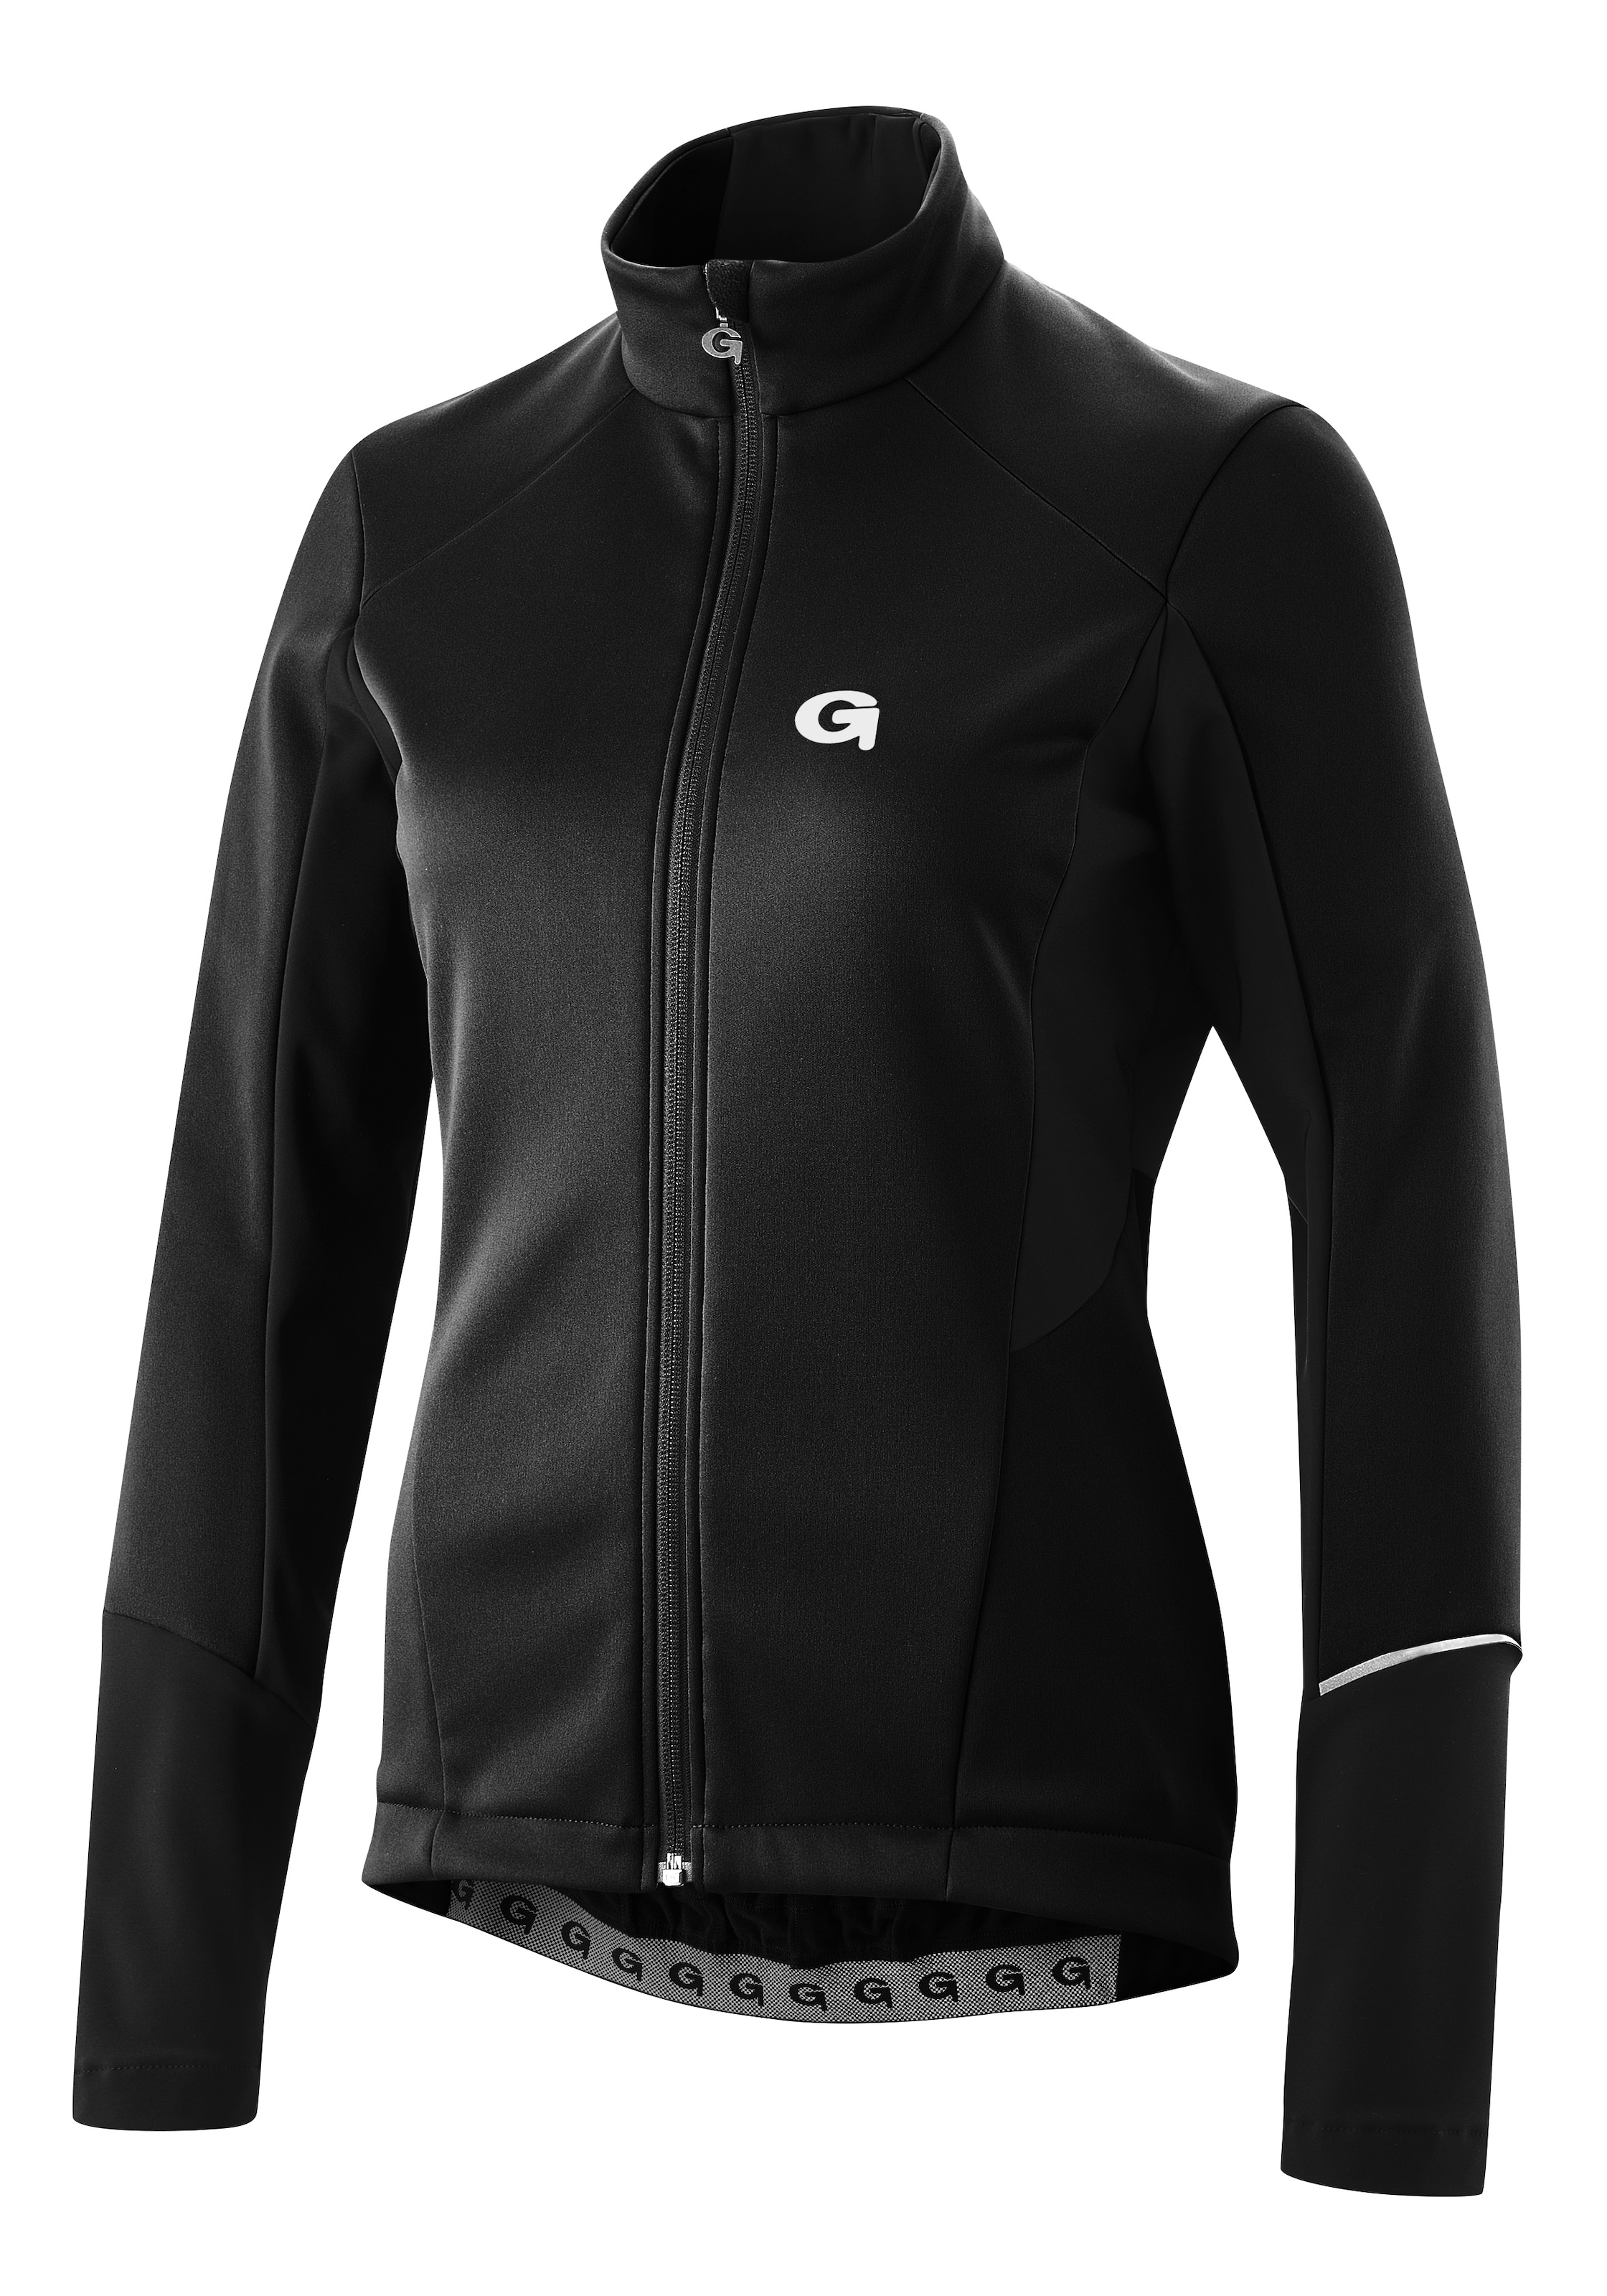 Gonso Fahrradjacke »FURIANI«, Damen Softshell-Jacke, Windjacke und atmungsaktiv wasserabweisend kaufen